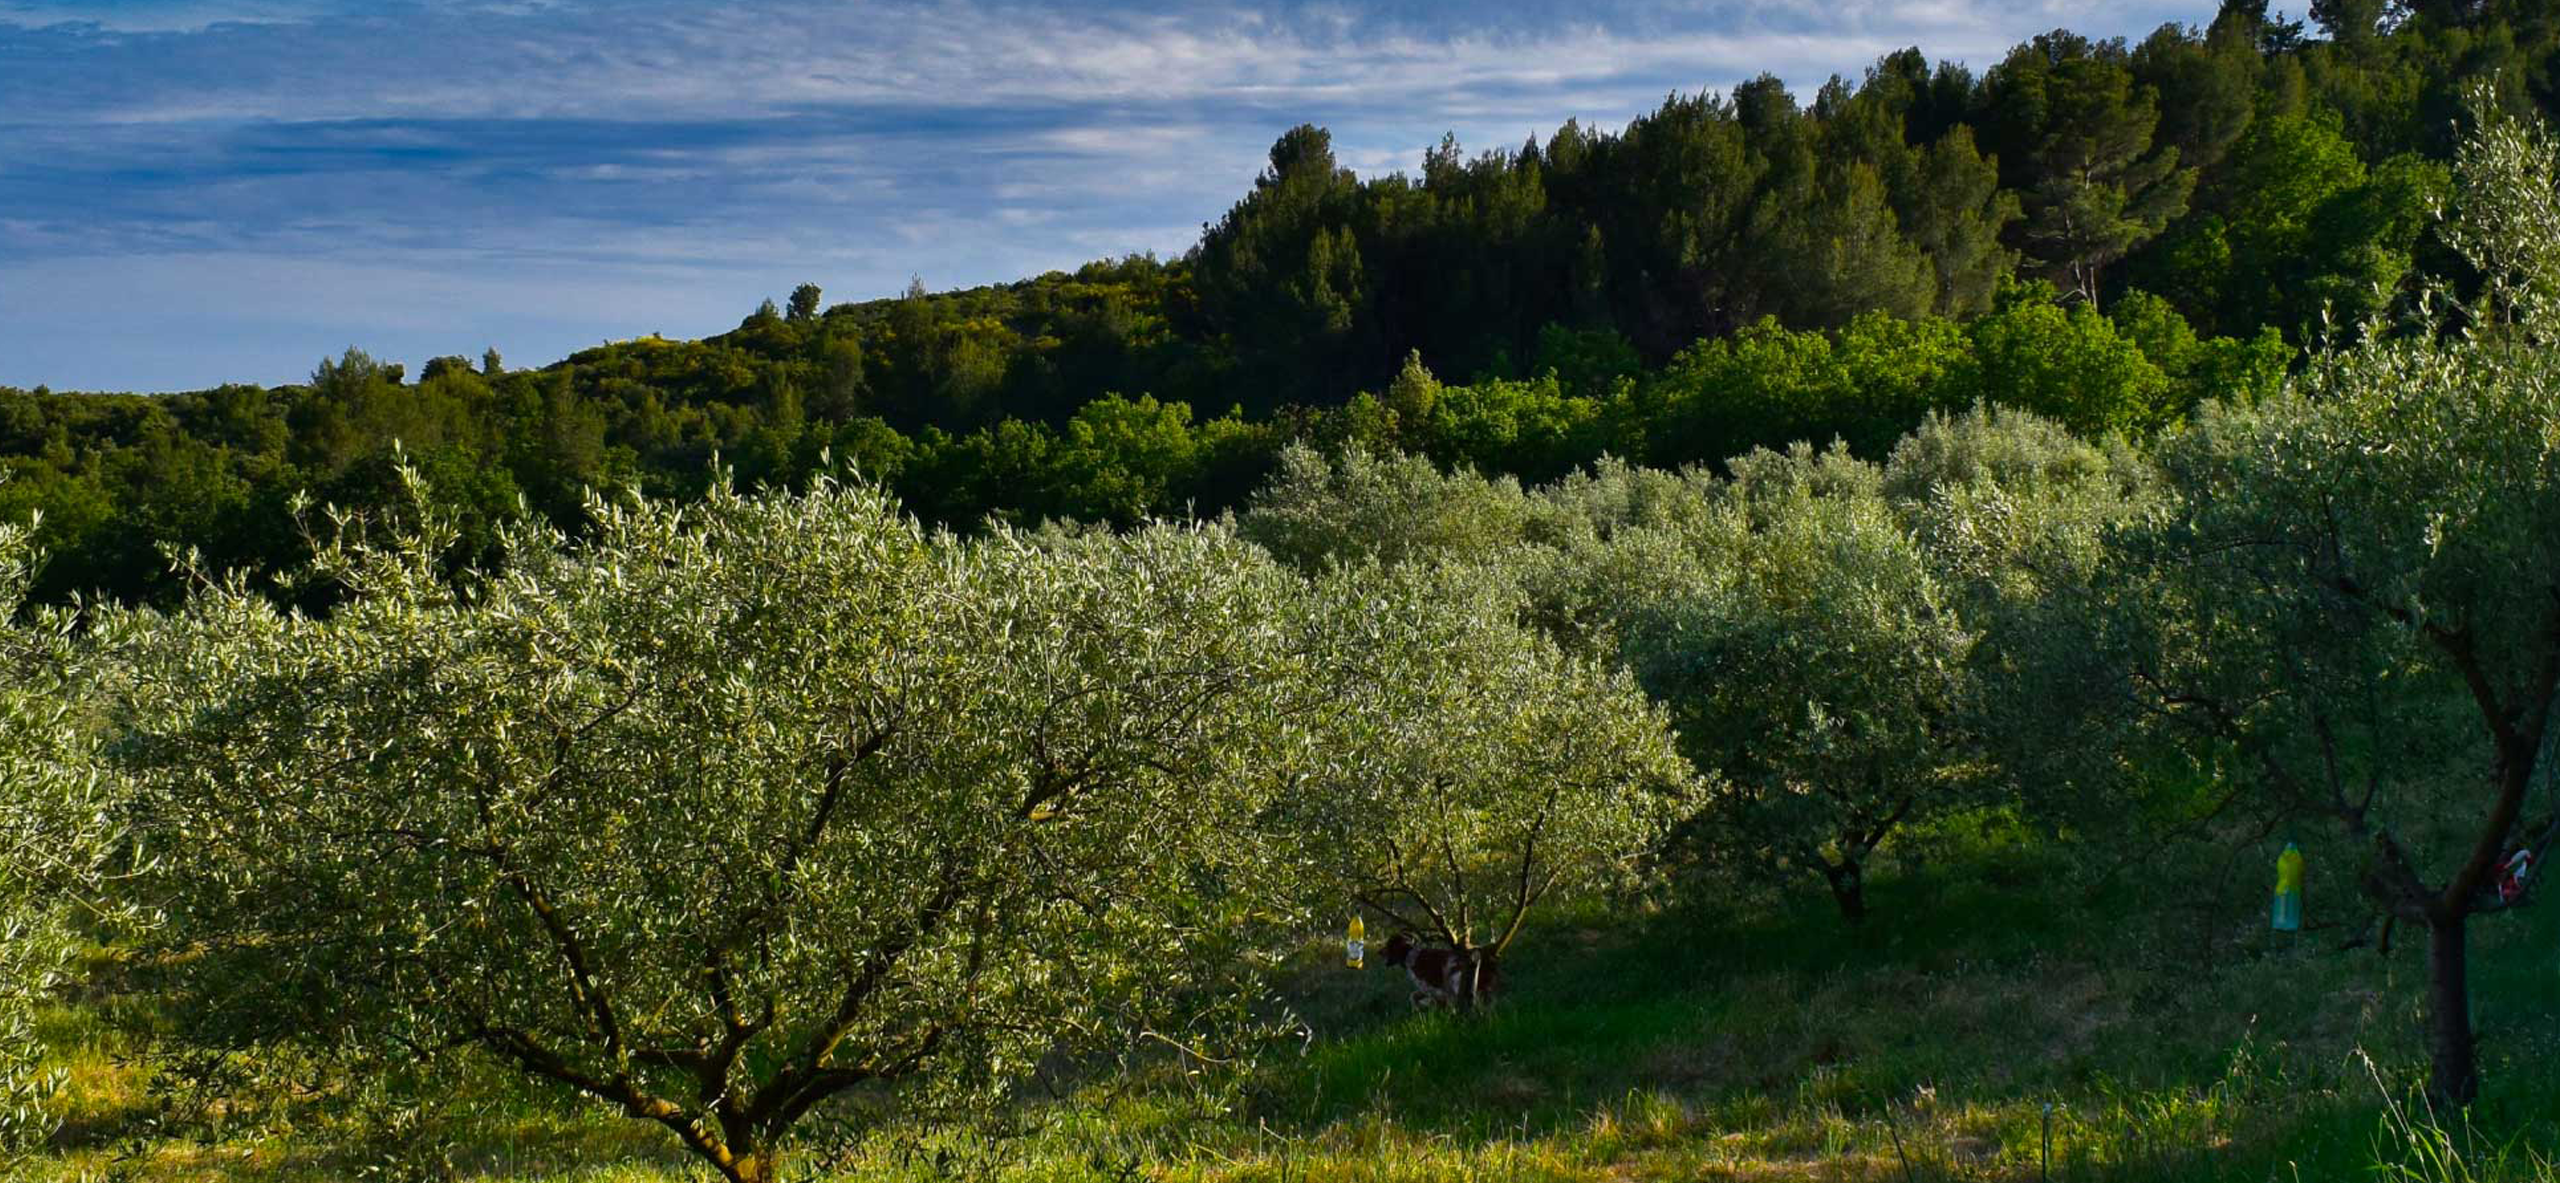 certified origins olive groves